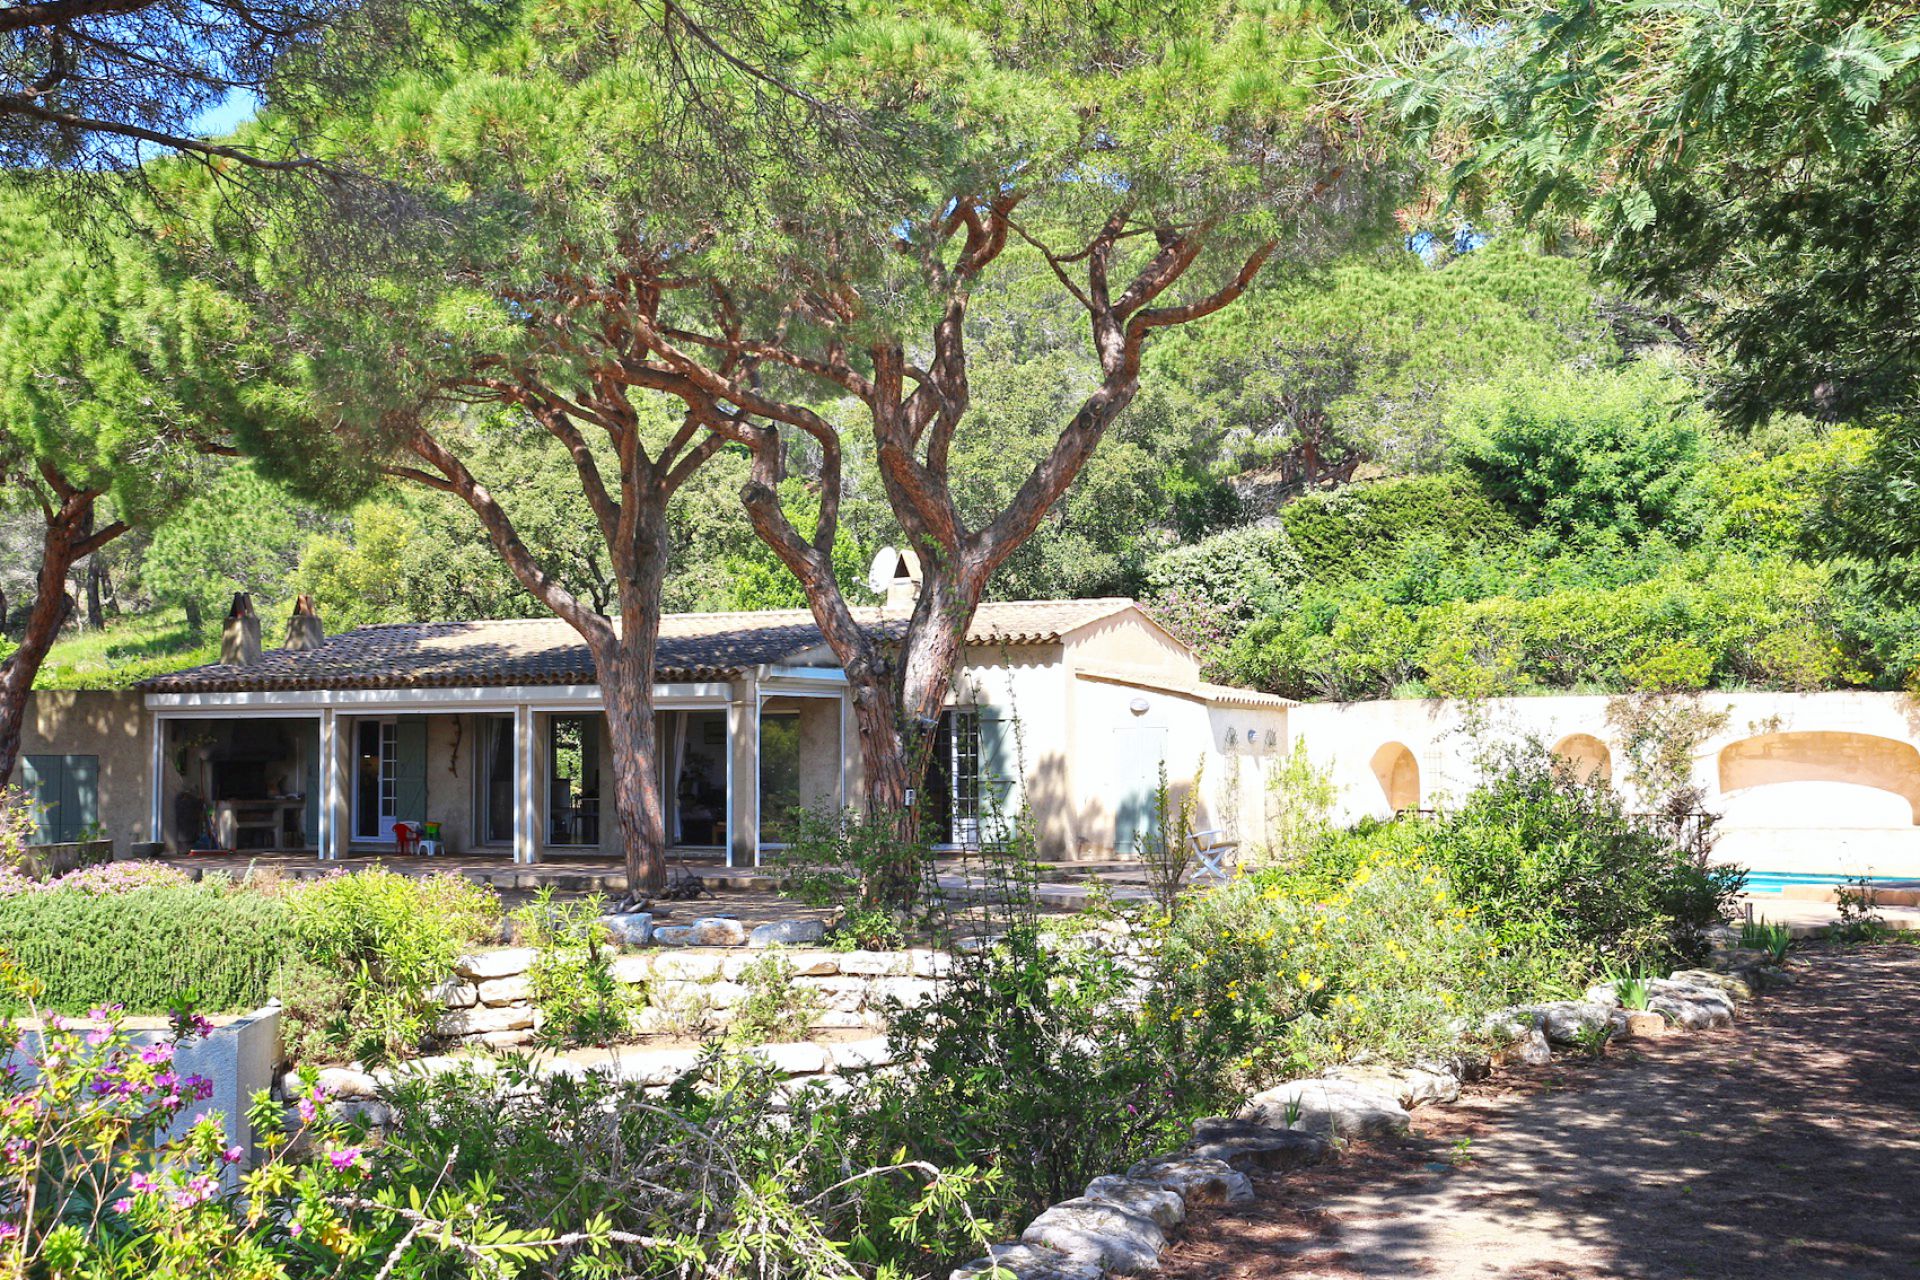 Méditerranée Location Villa with Private pool in Ramatuelle, Côte d'Azur